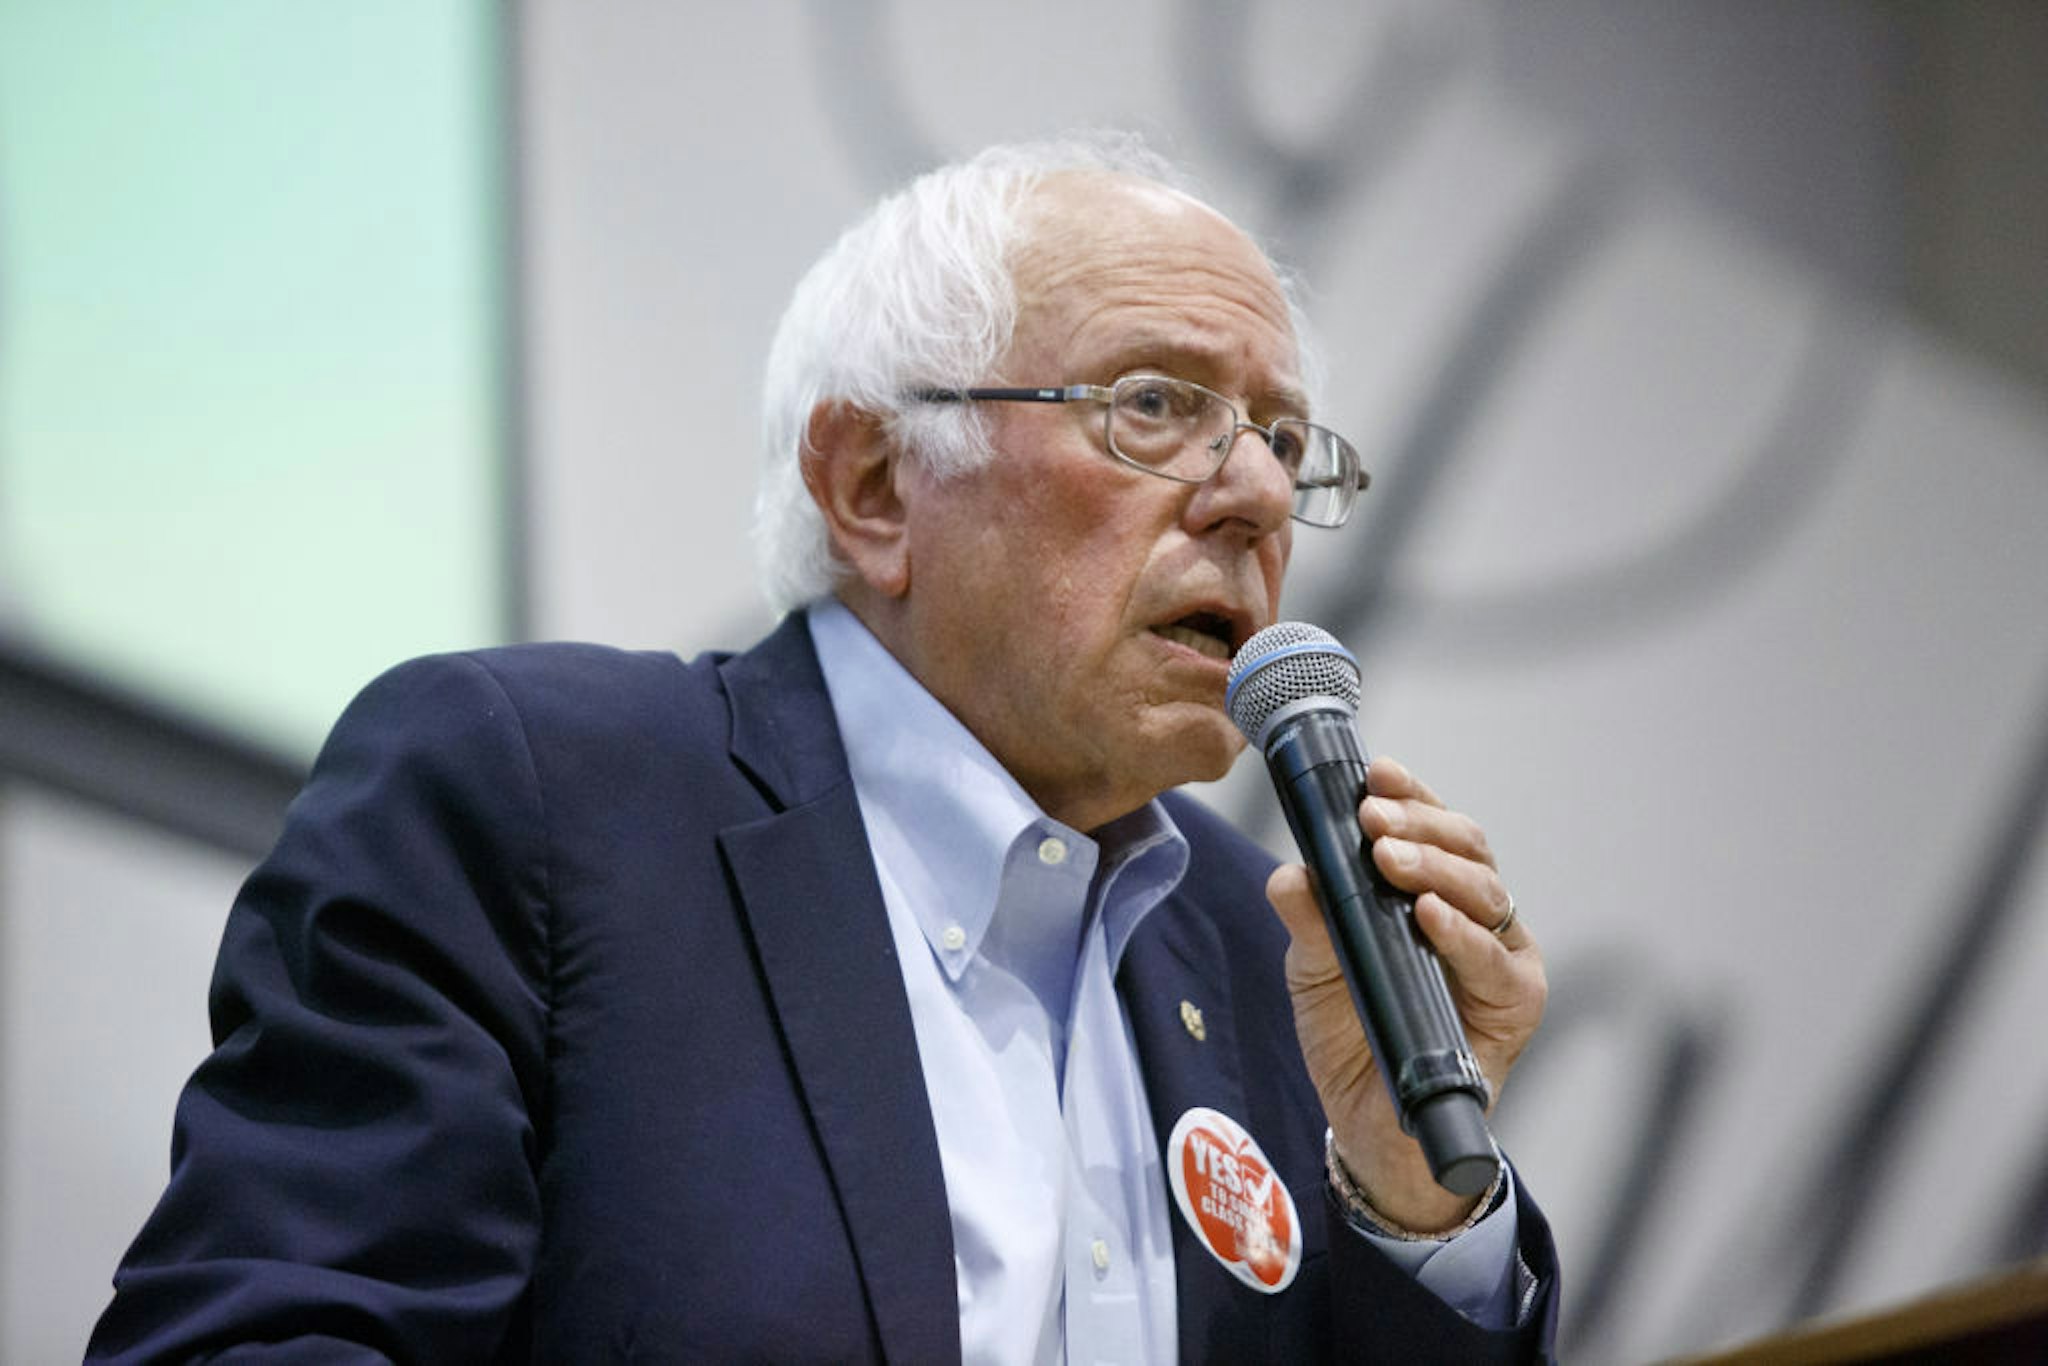 Bernie Sanders speaks during a Chicago Teachers Union Strike Authorization Vote Rally